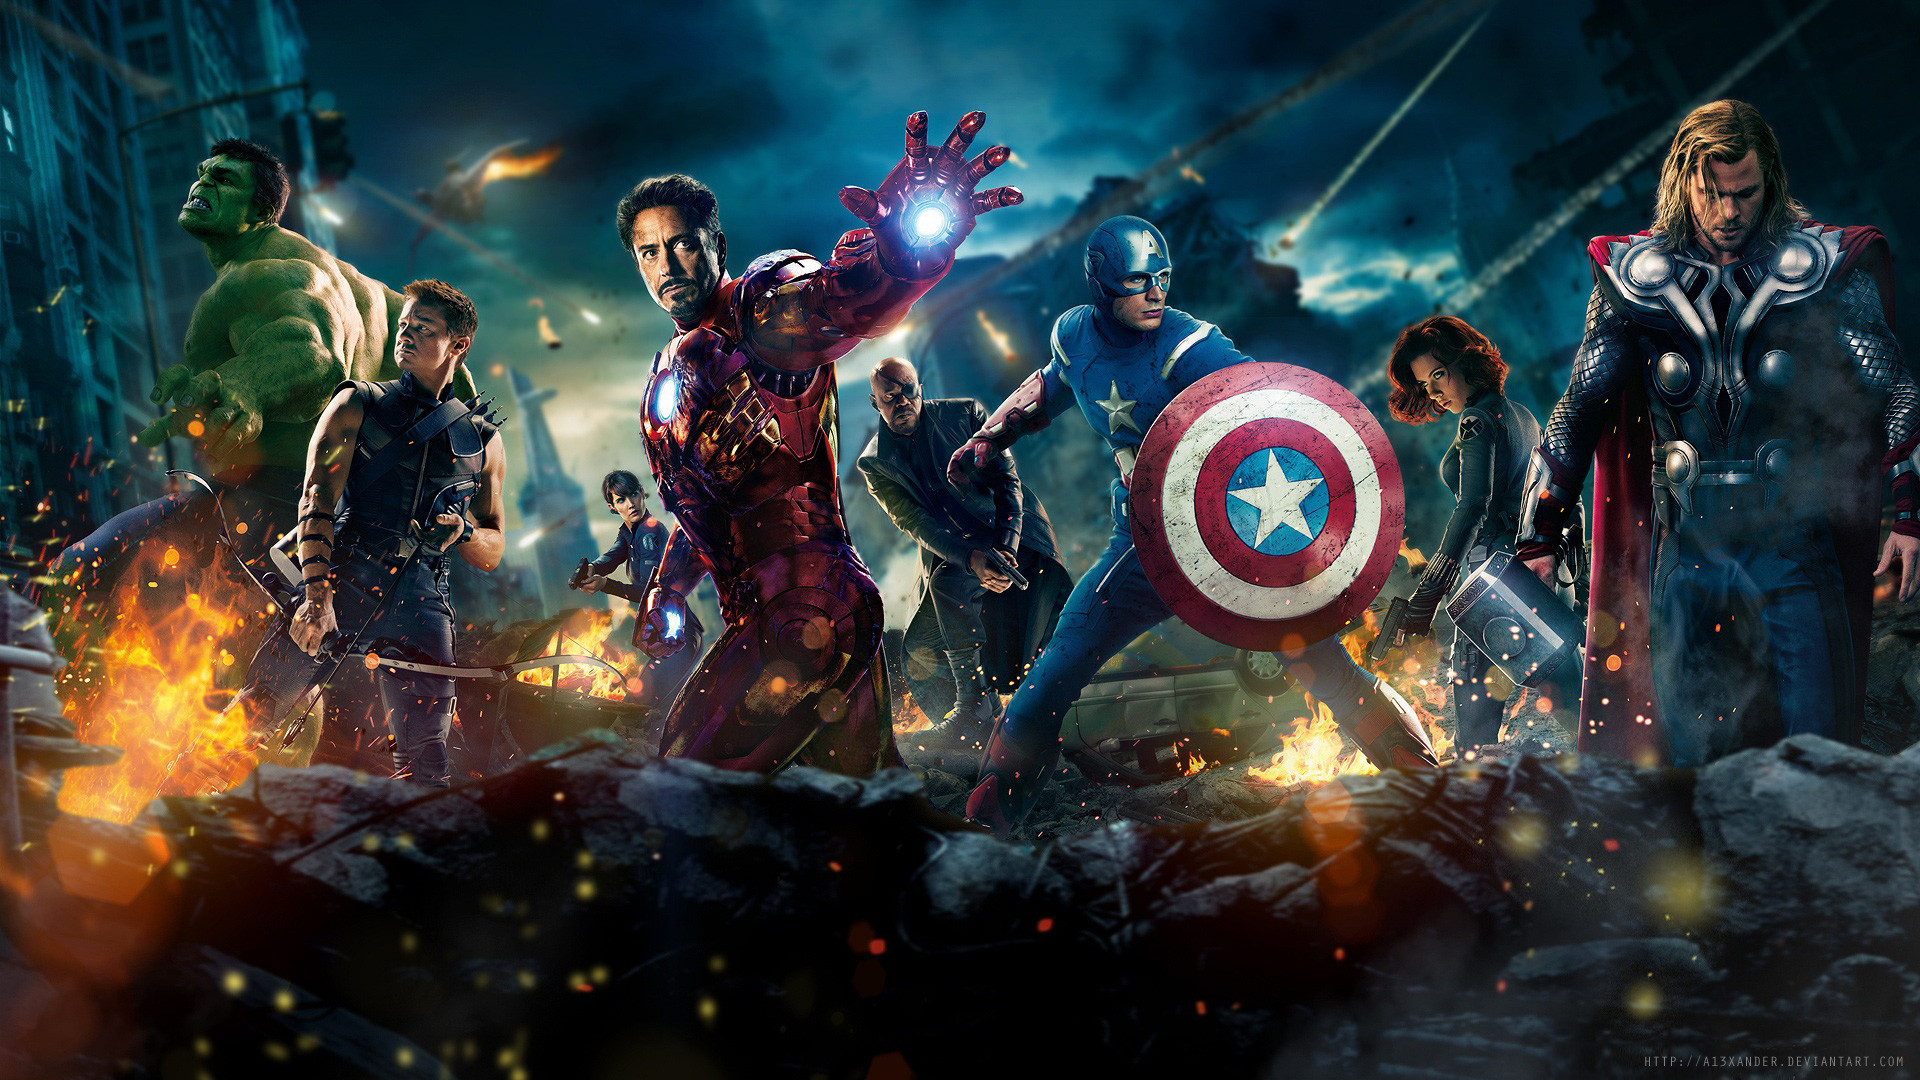 1920x1080 Avengers | Full HD Wallpapers, download 1080p desktop backgrounds